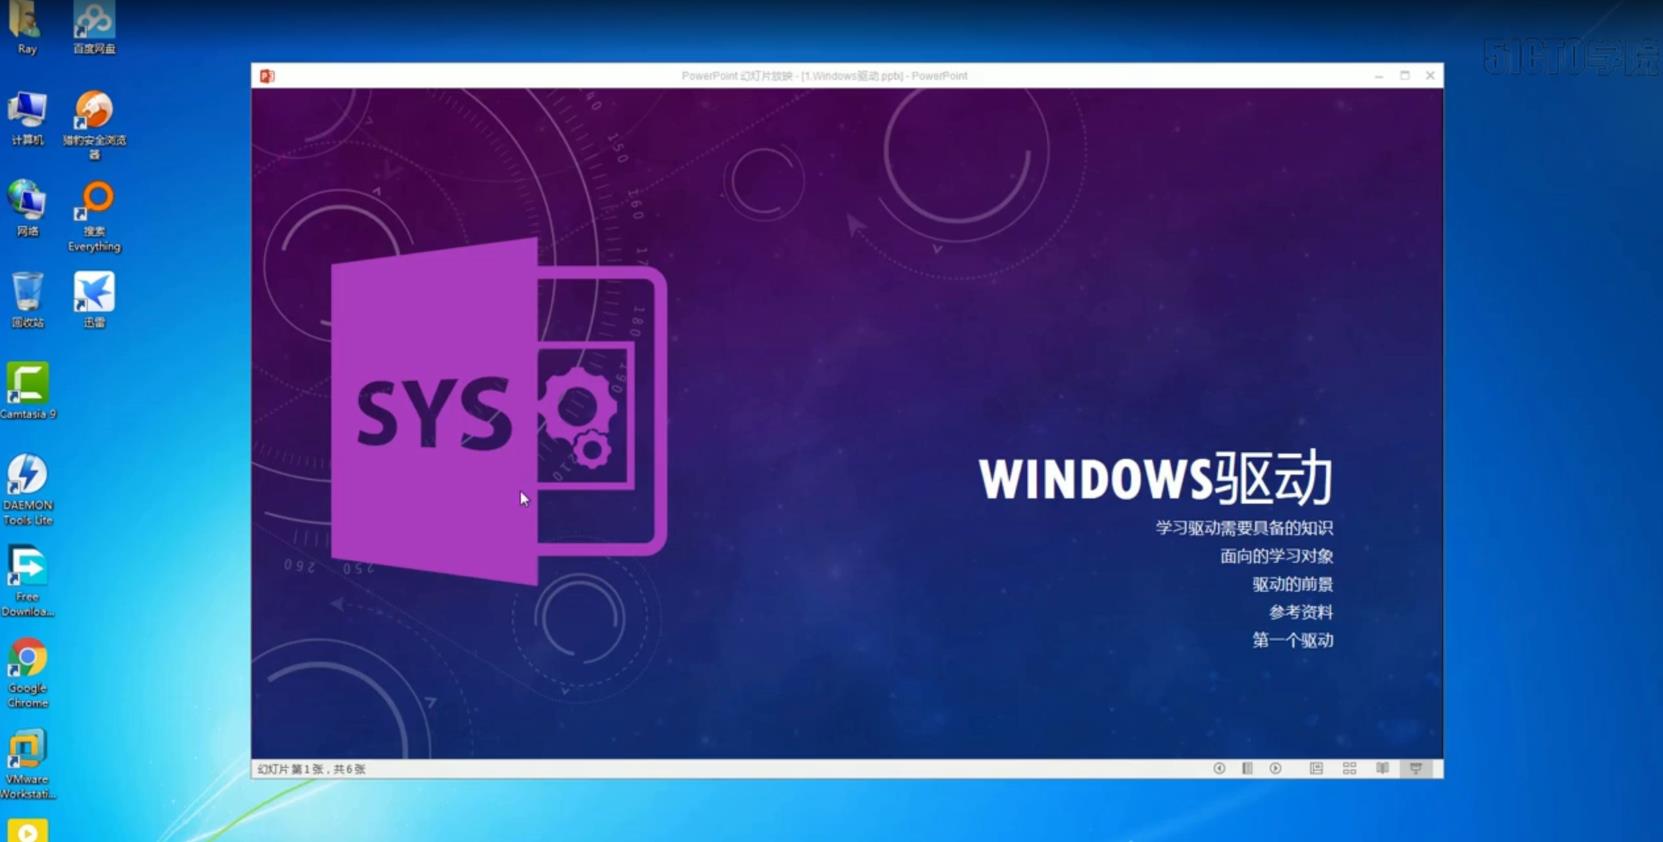 Windows驱动编程入门教程